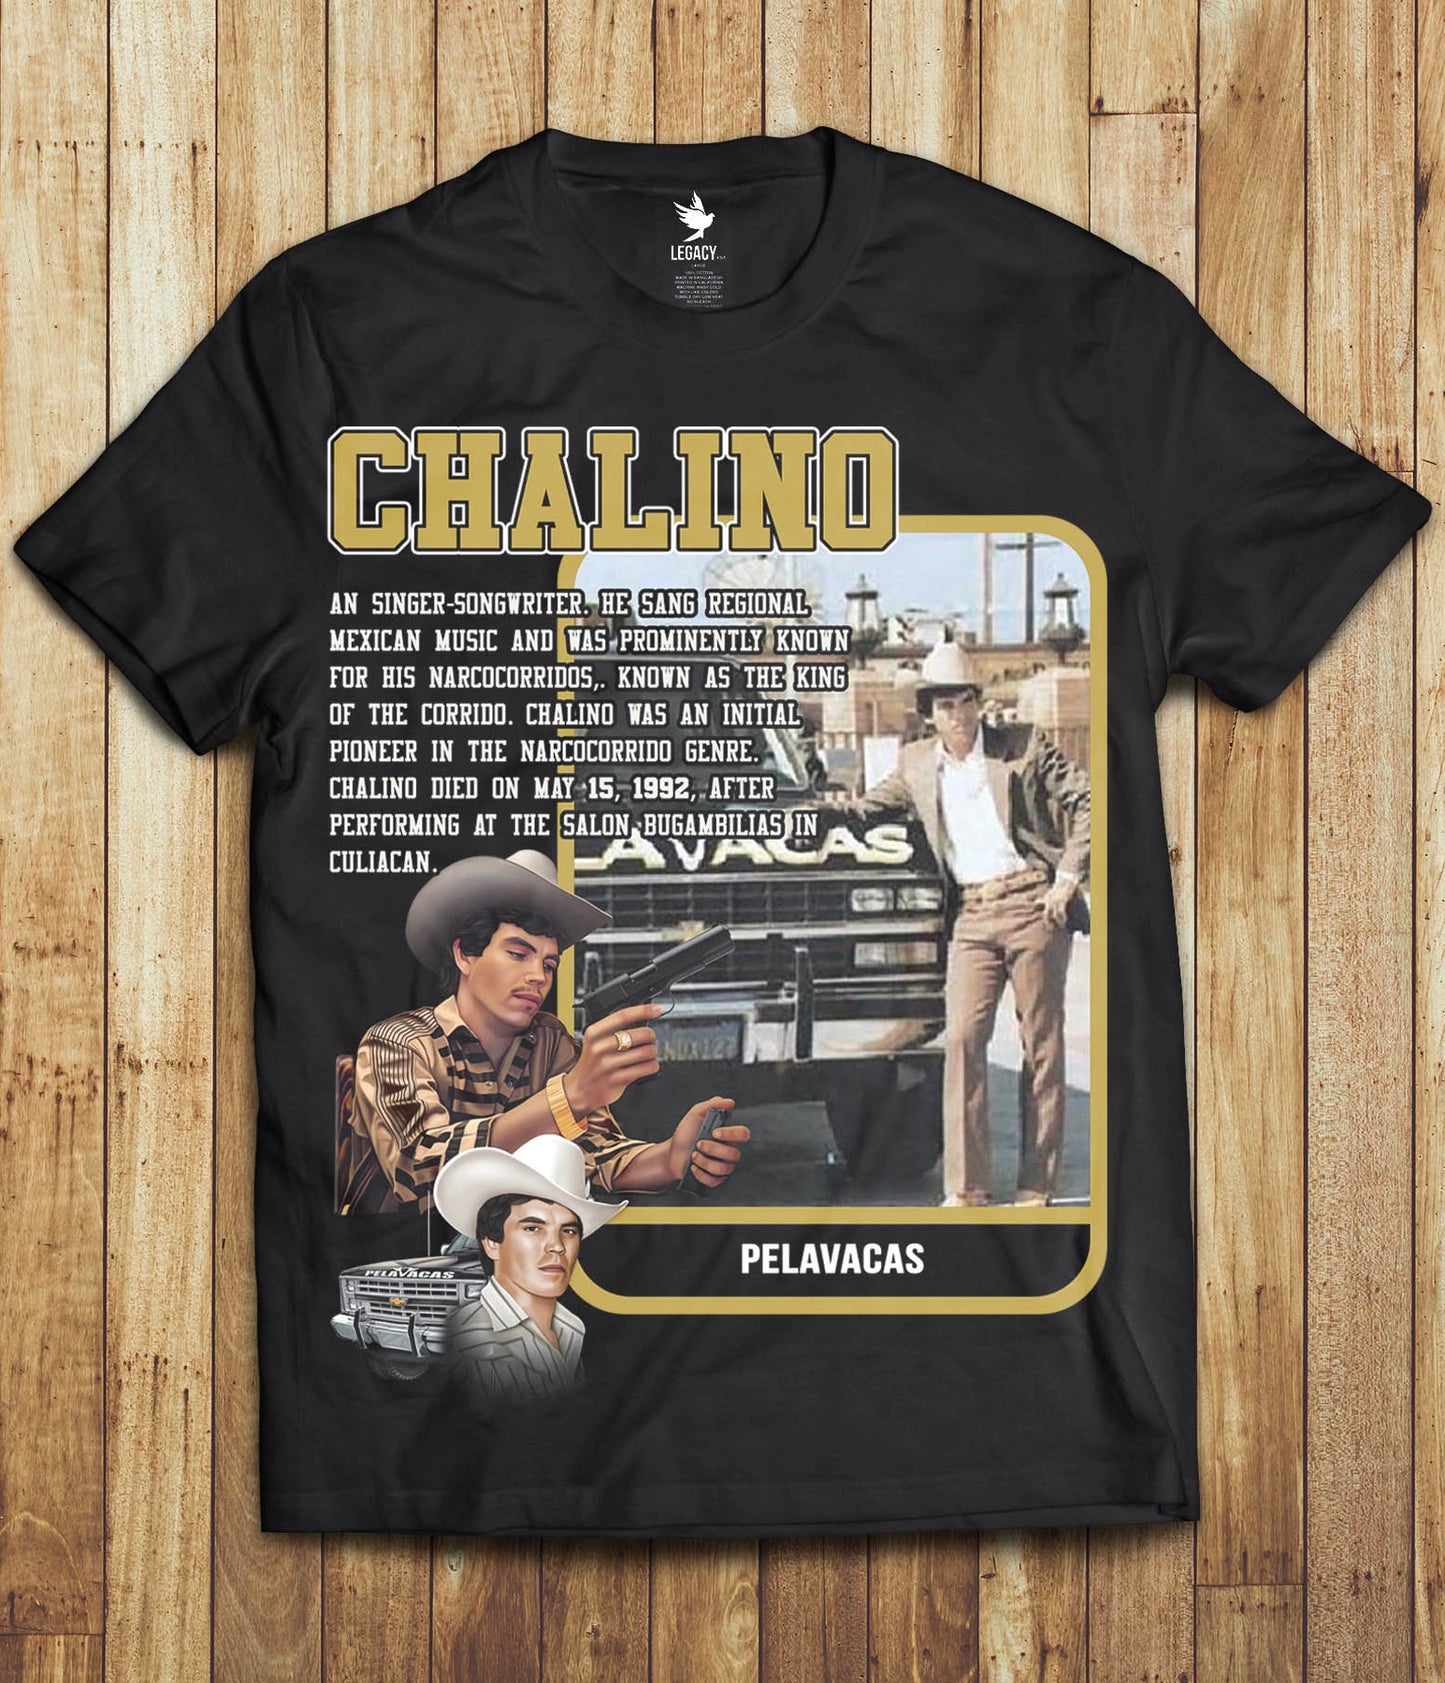 Chalino Card T-Shirt